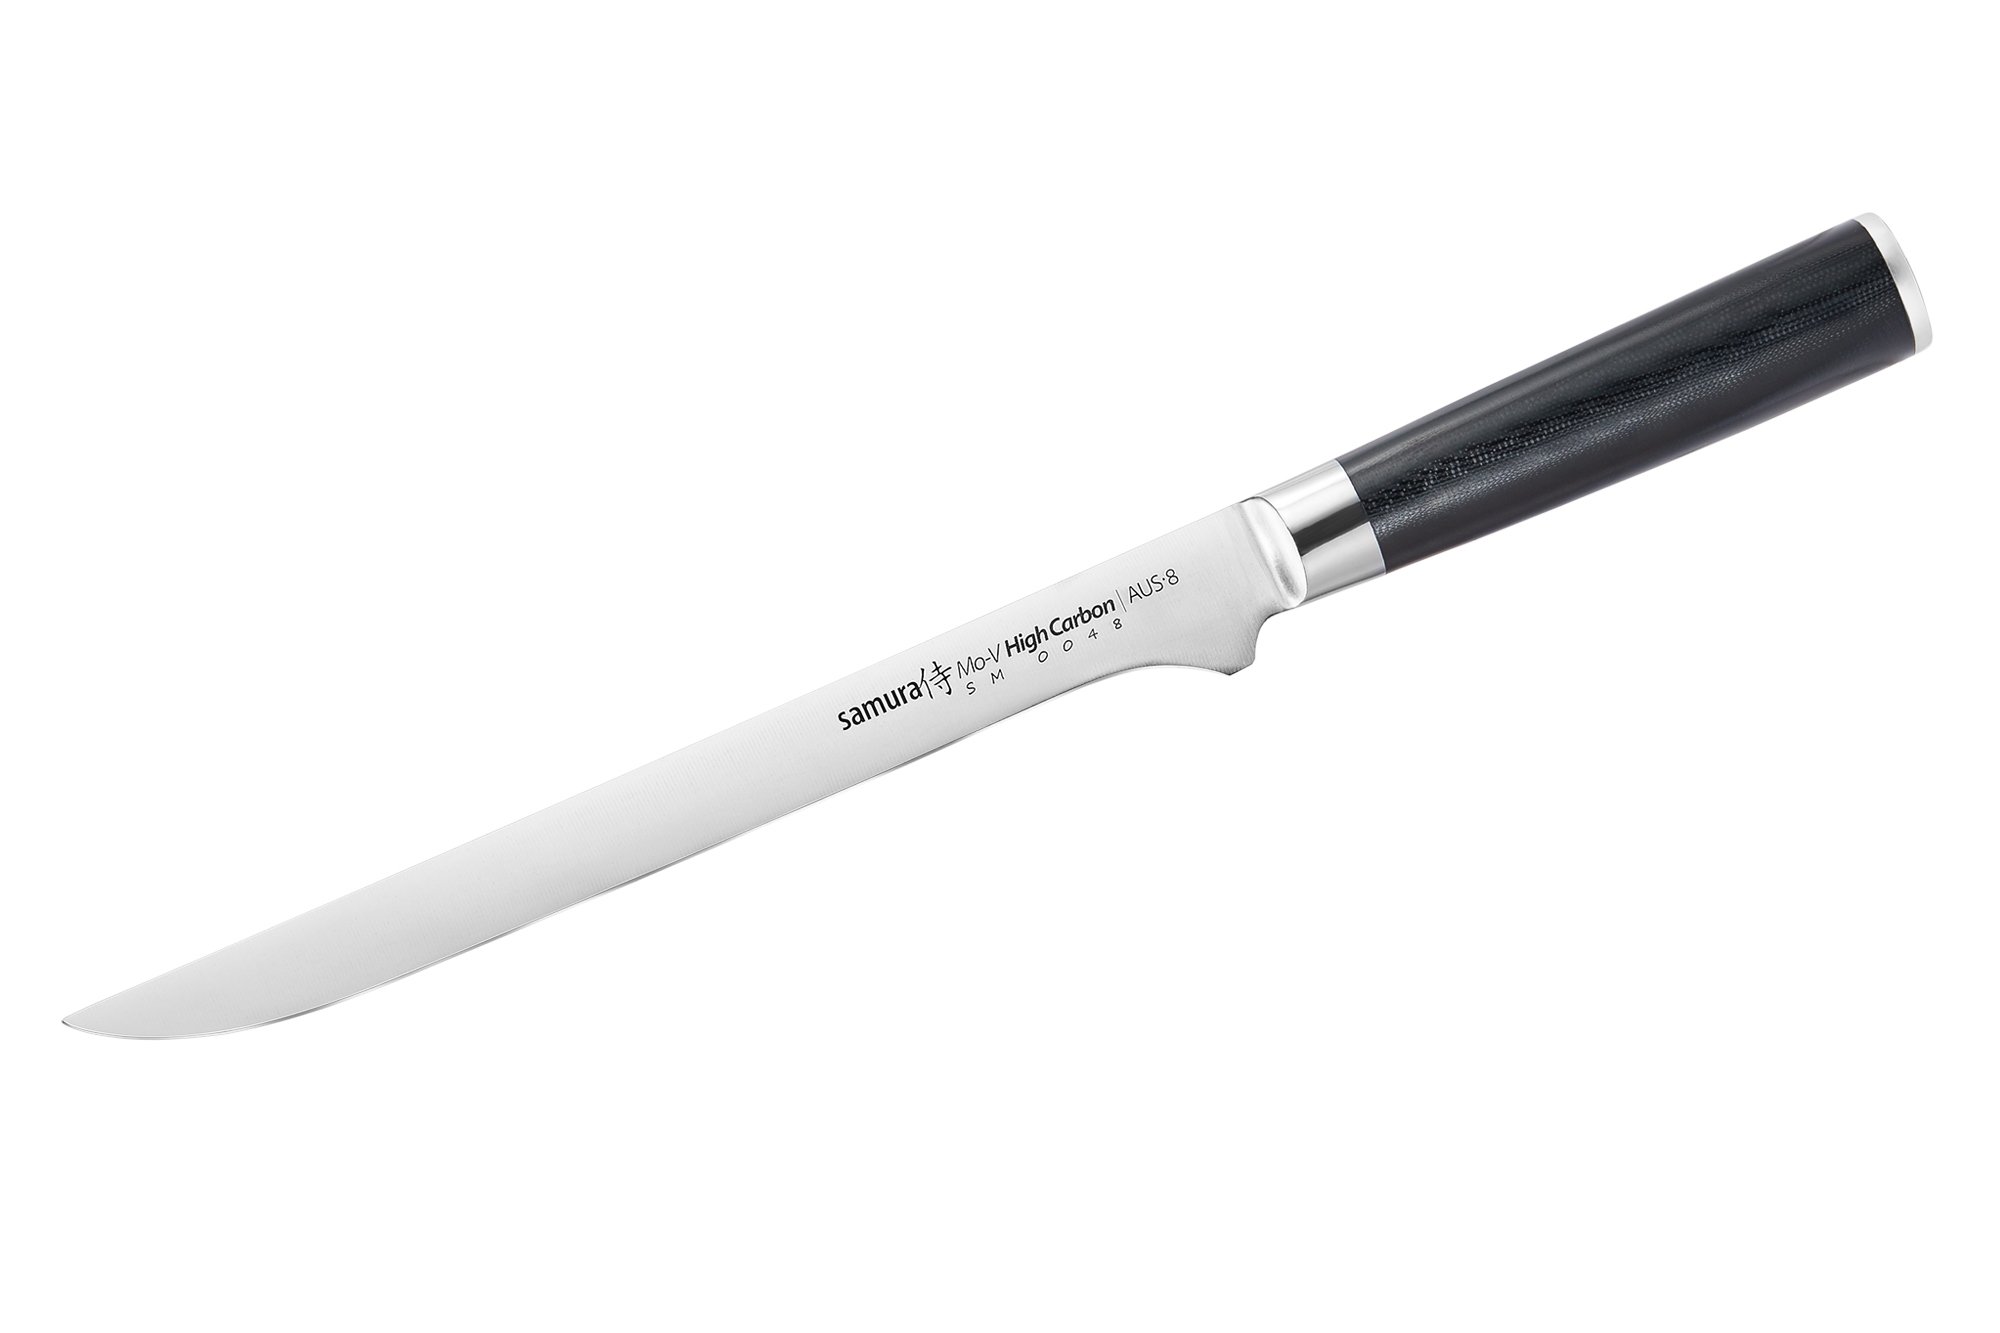 Купить ножи самура в интернет. Нож Samura Harakiri SHR-0048b. Филейный нож Rapala 126sp. Нож обвалочный Samura mo-v. Нож Samura mo-v SM-0045.